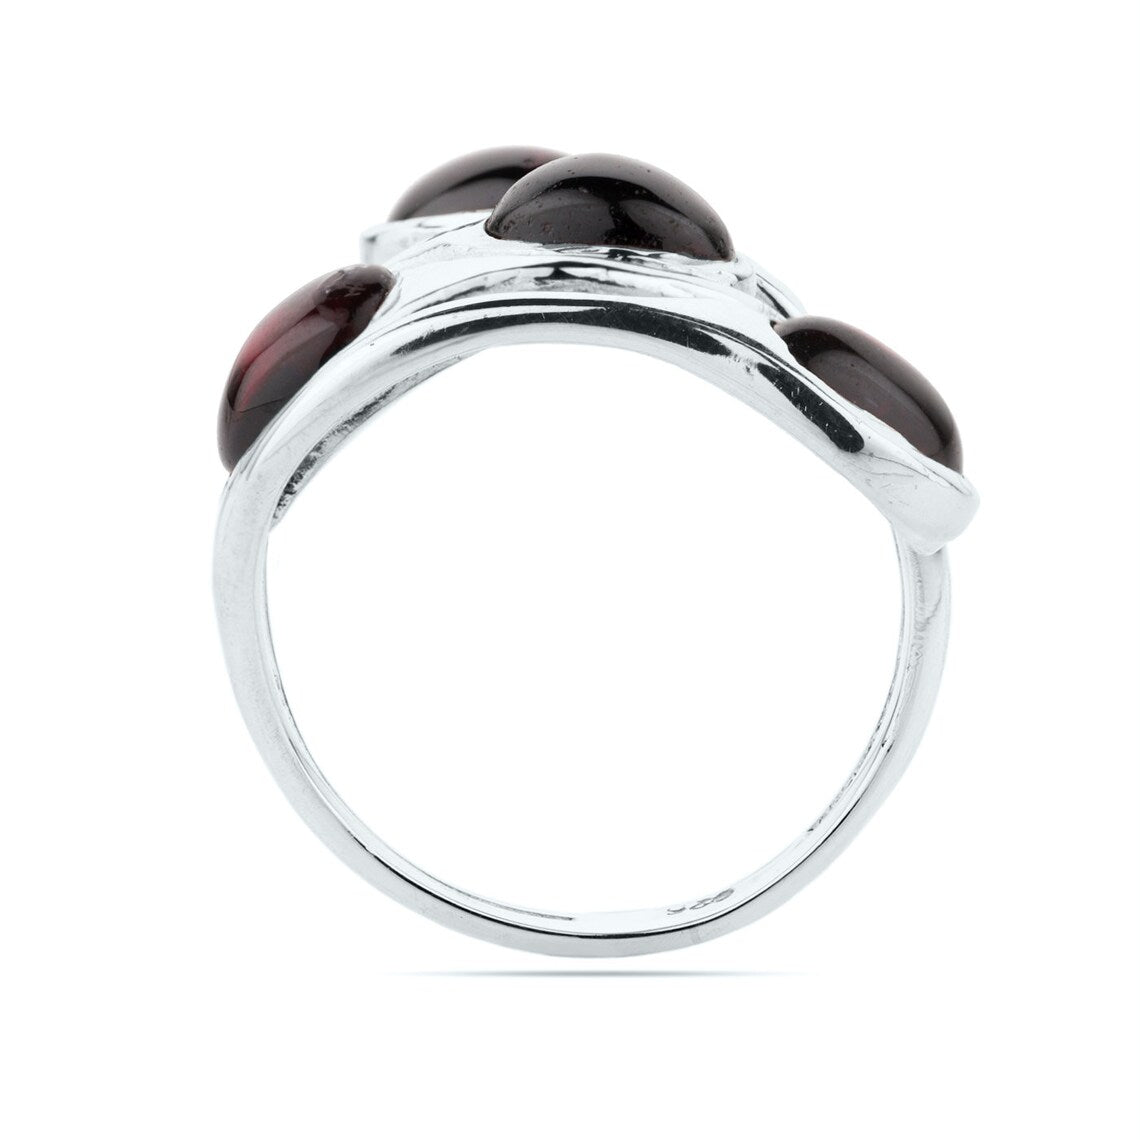 Natural Red Garnet Oval Cabochon Gemstones 925 Sterling Silver Stackable Designer Eternity Ring Size -6 to 10 U.S. Garnet Silver Ring